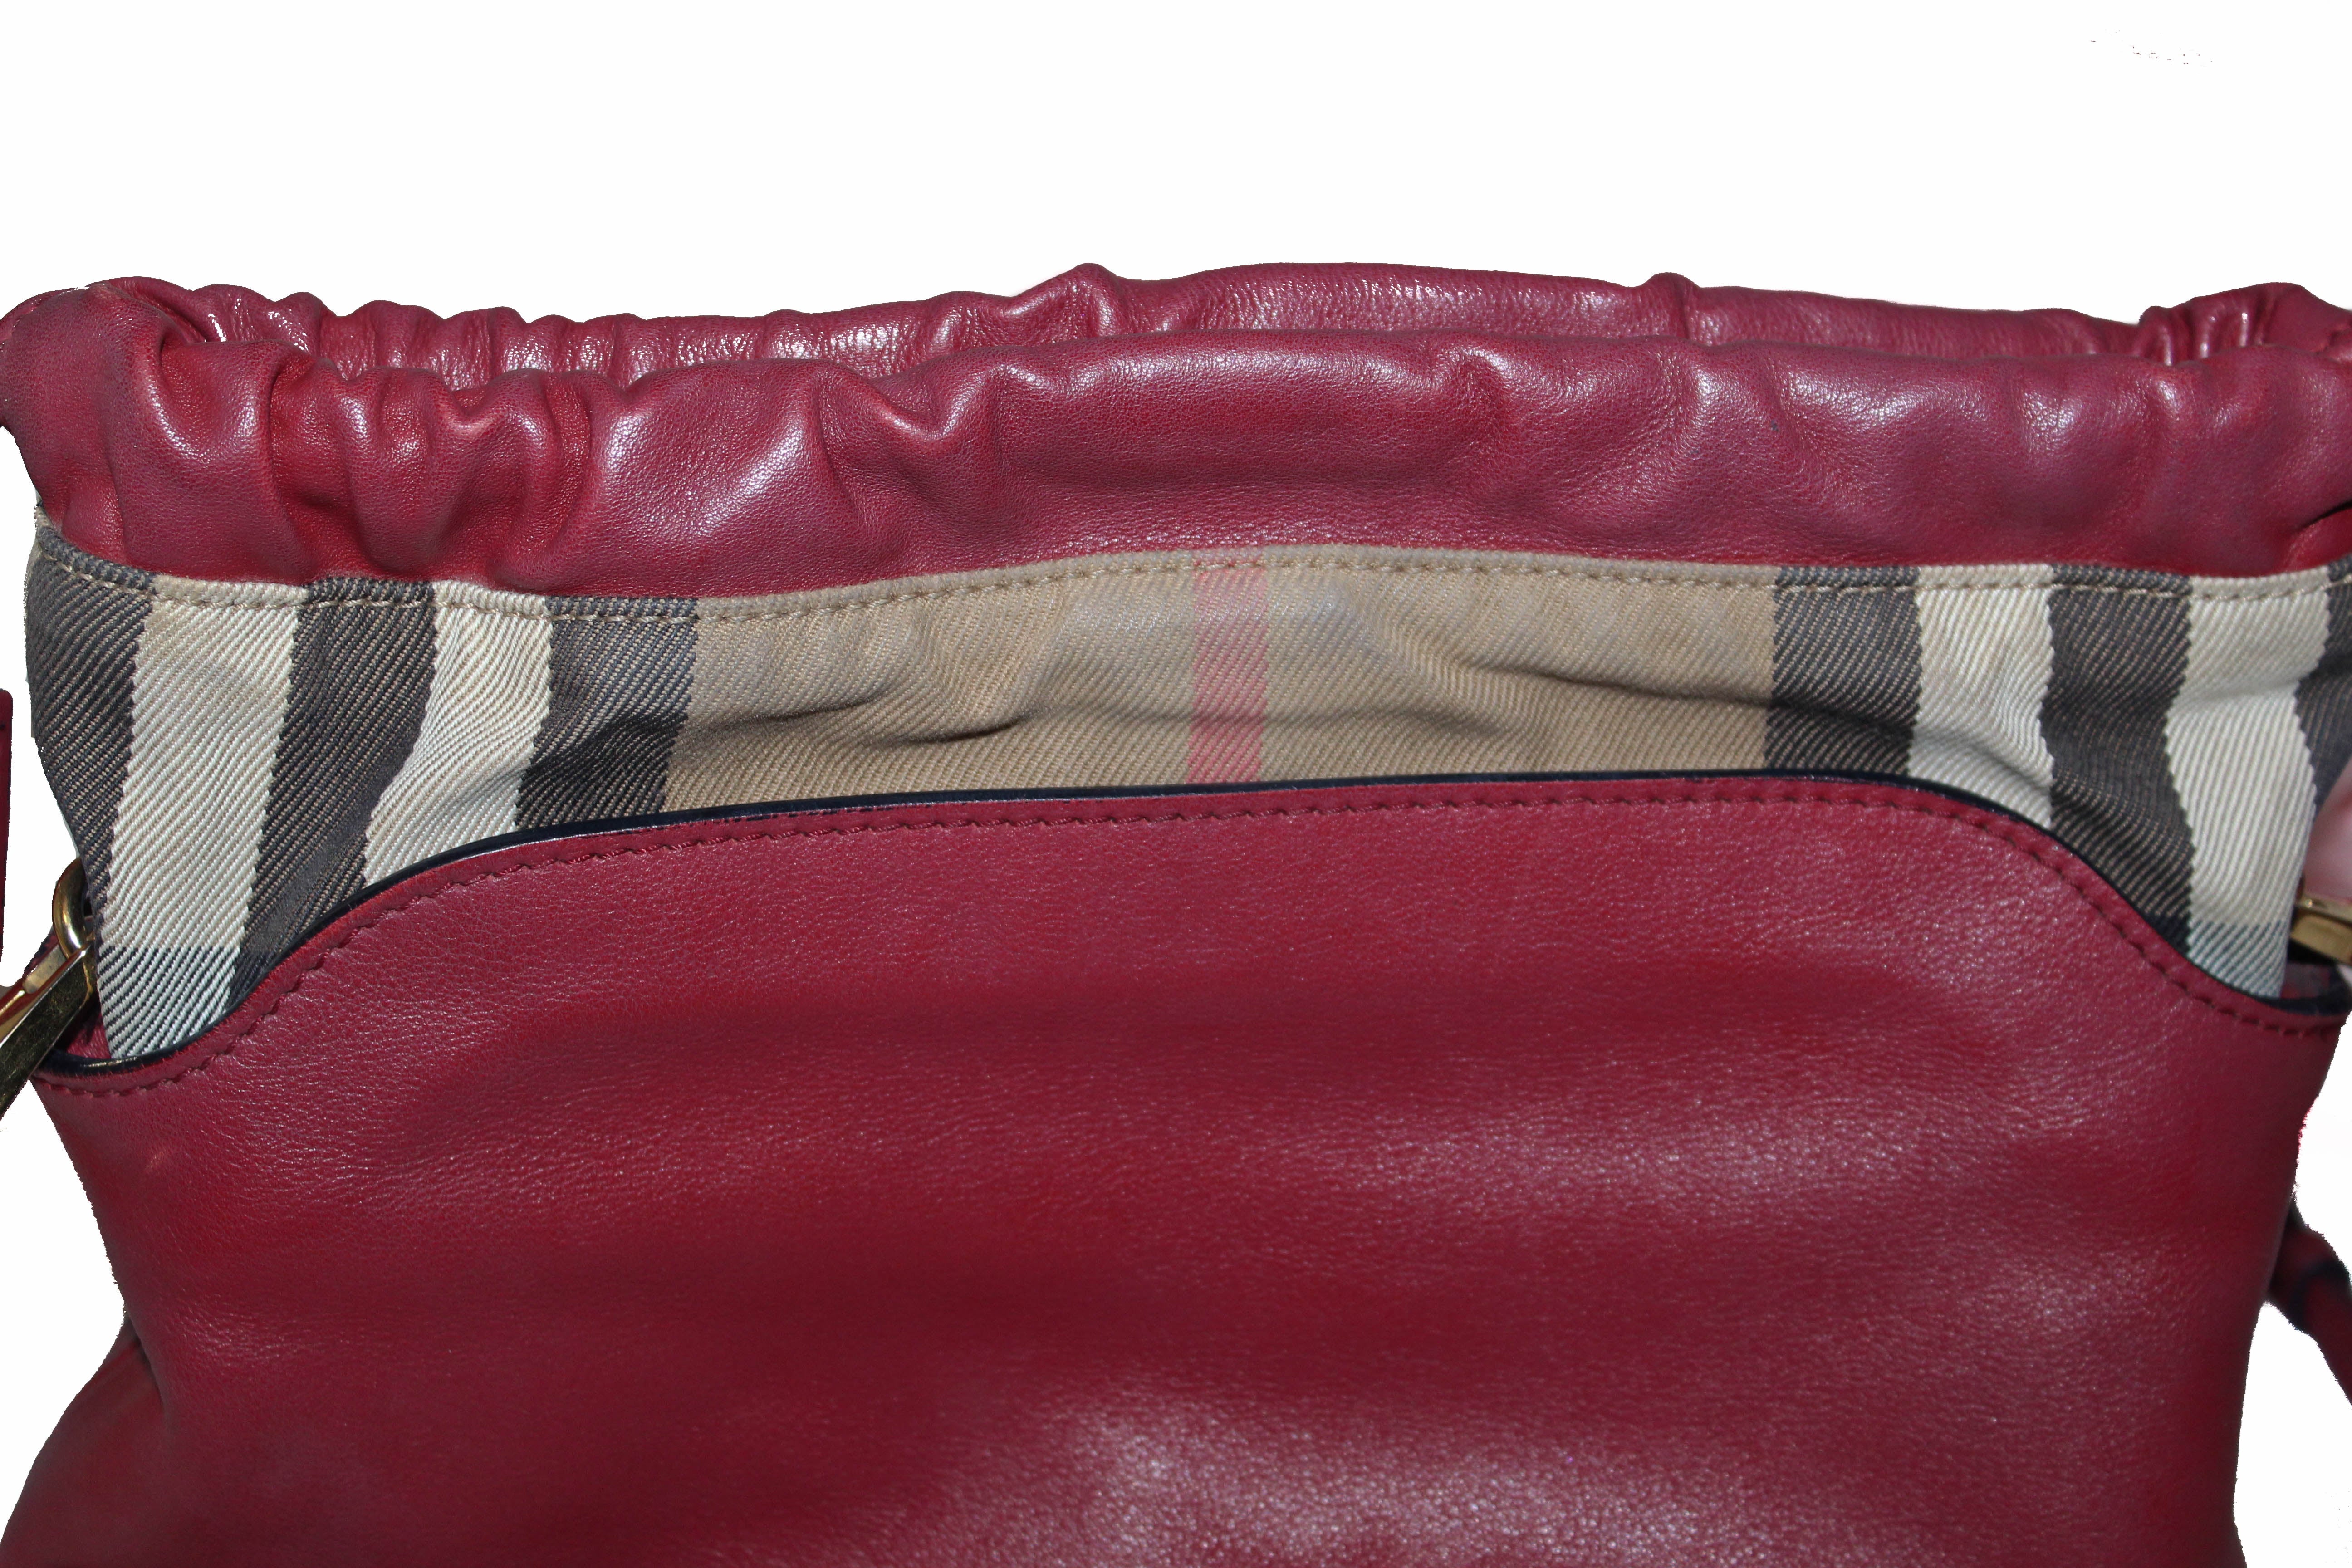 Authentic Burberry Dark Pink Leather/Haymarket Crossbody Bag